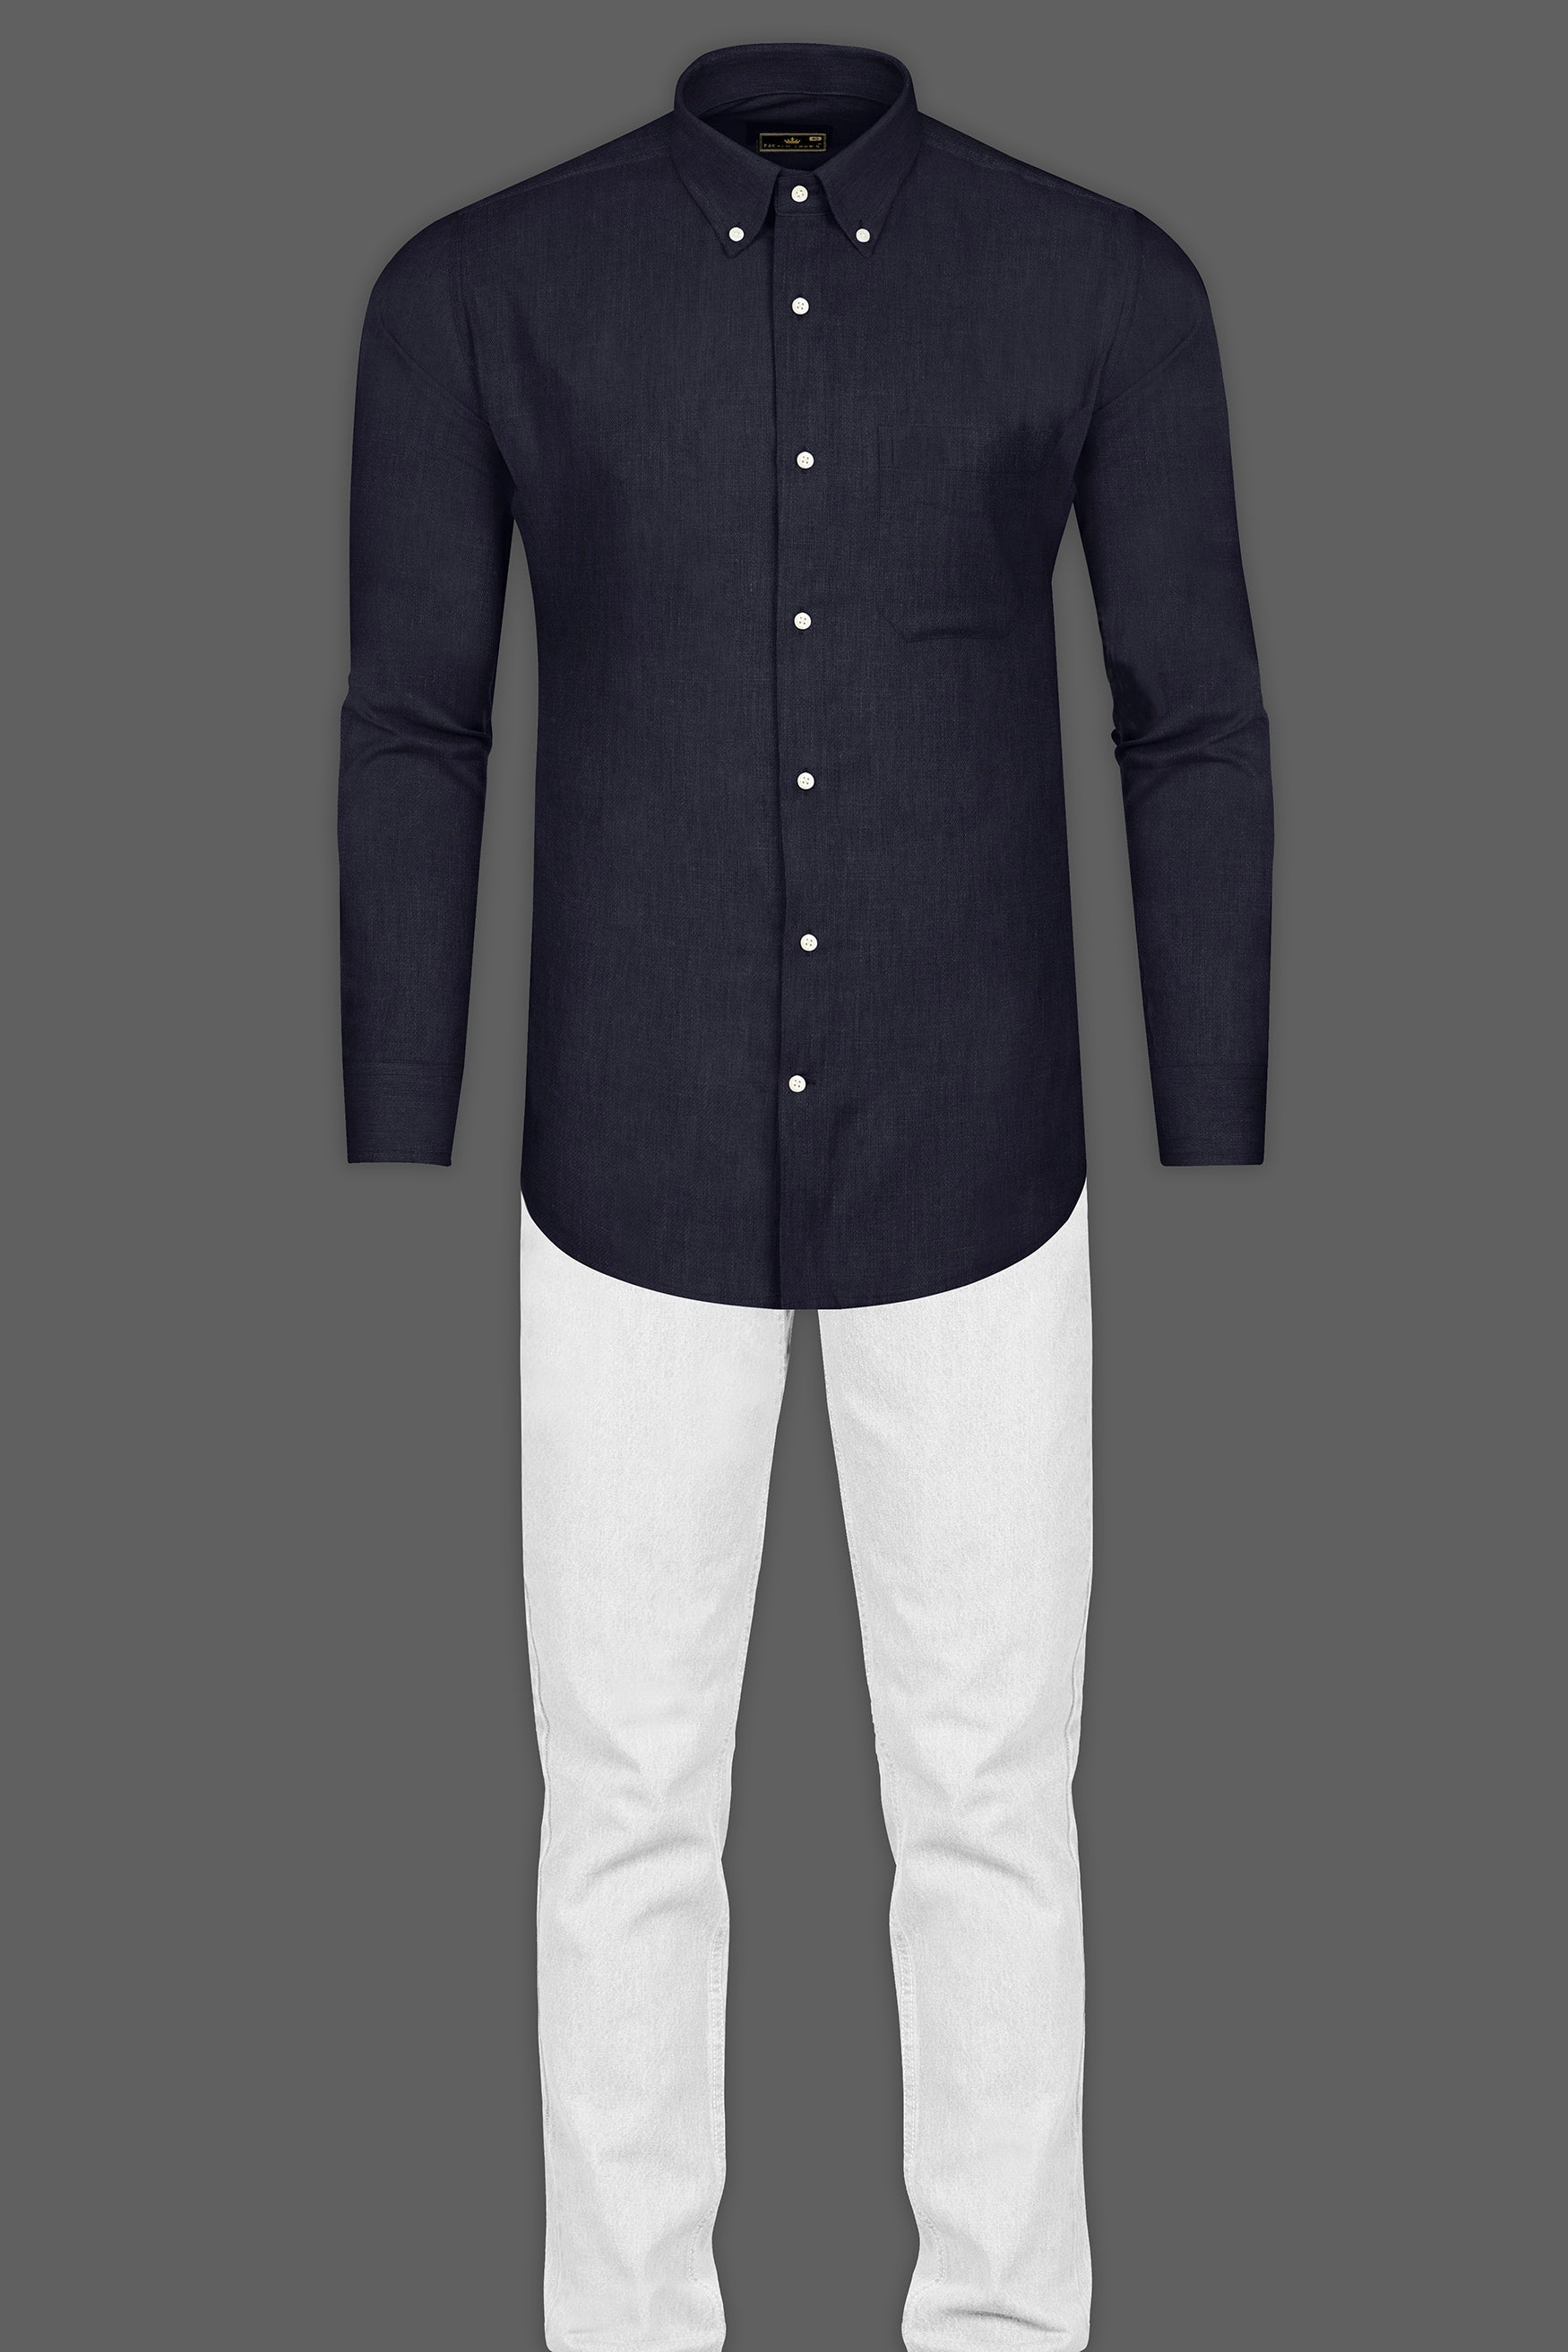 Charade Navy Blue Luxuries linen Shirt